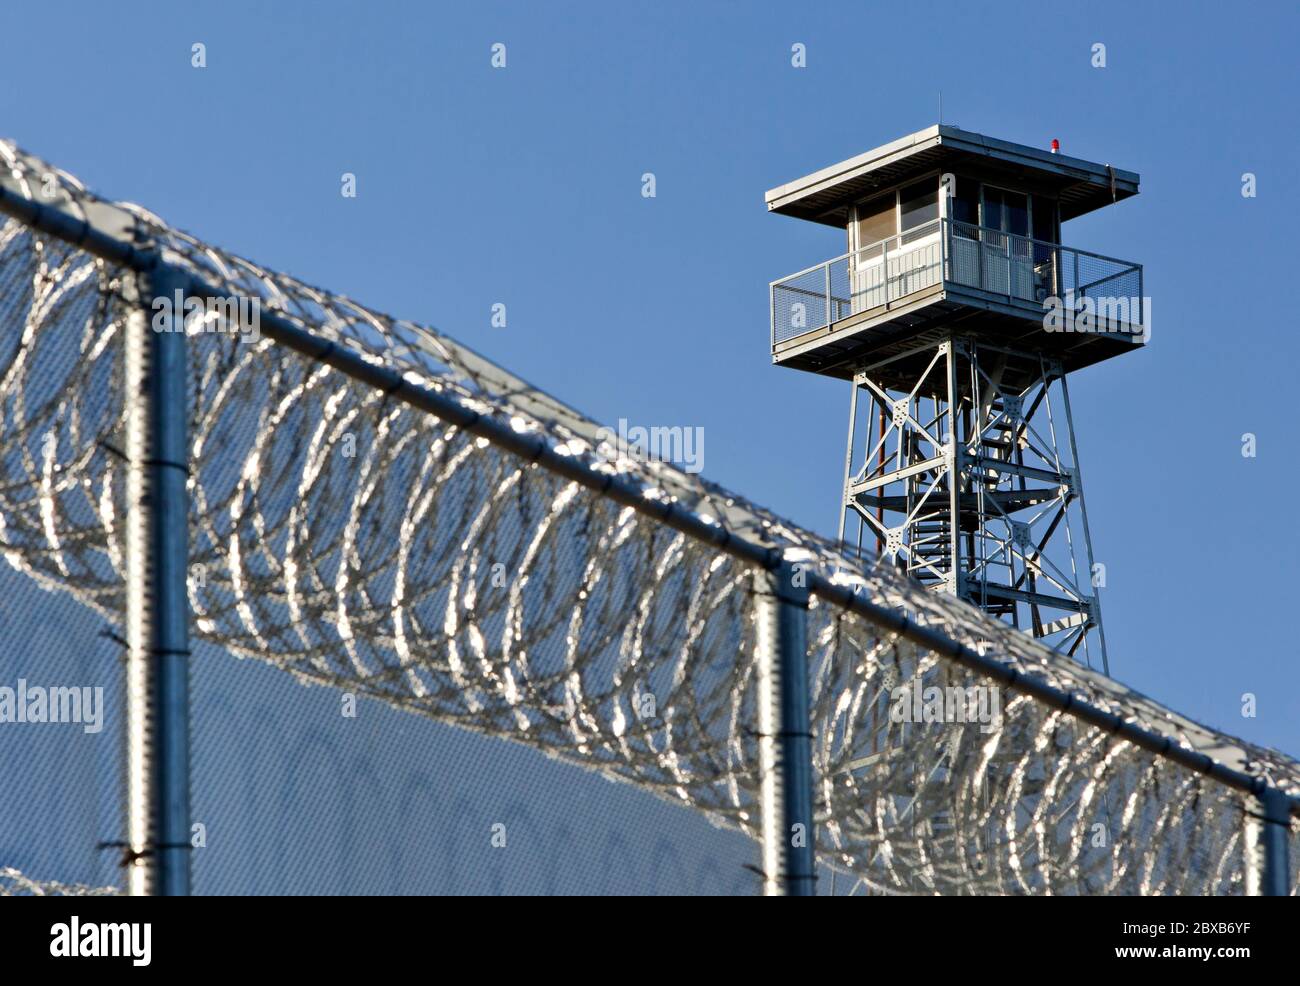 Prison security razor wire fence, guard watchtower overlooking complex, Preston School Of Industry. Stock Photo